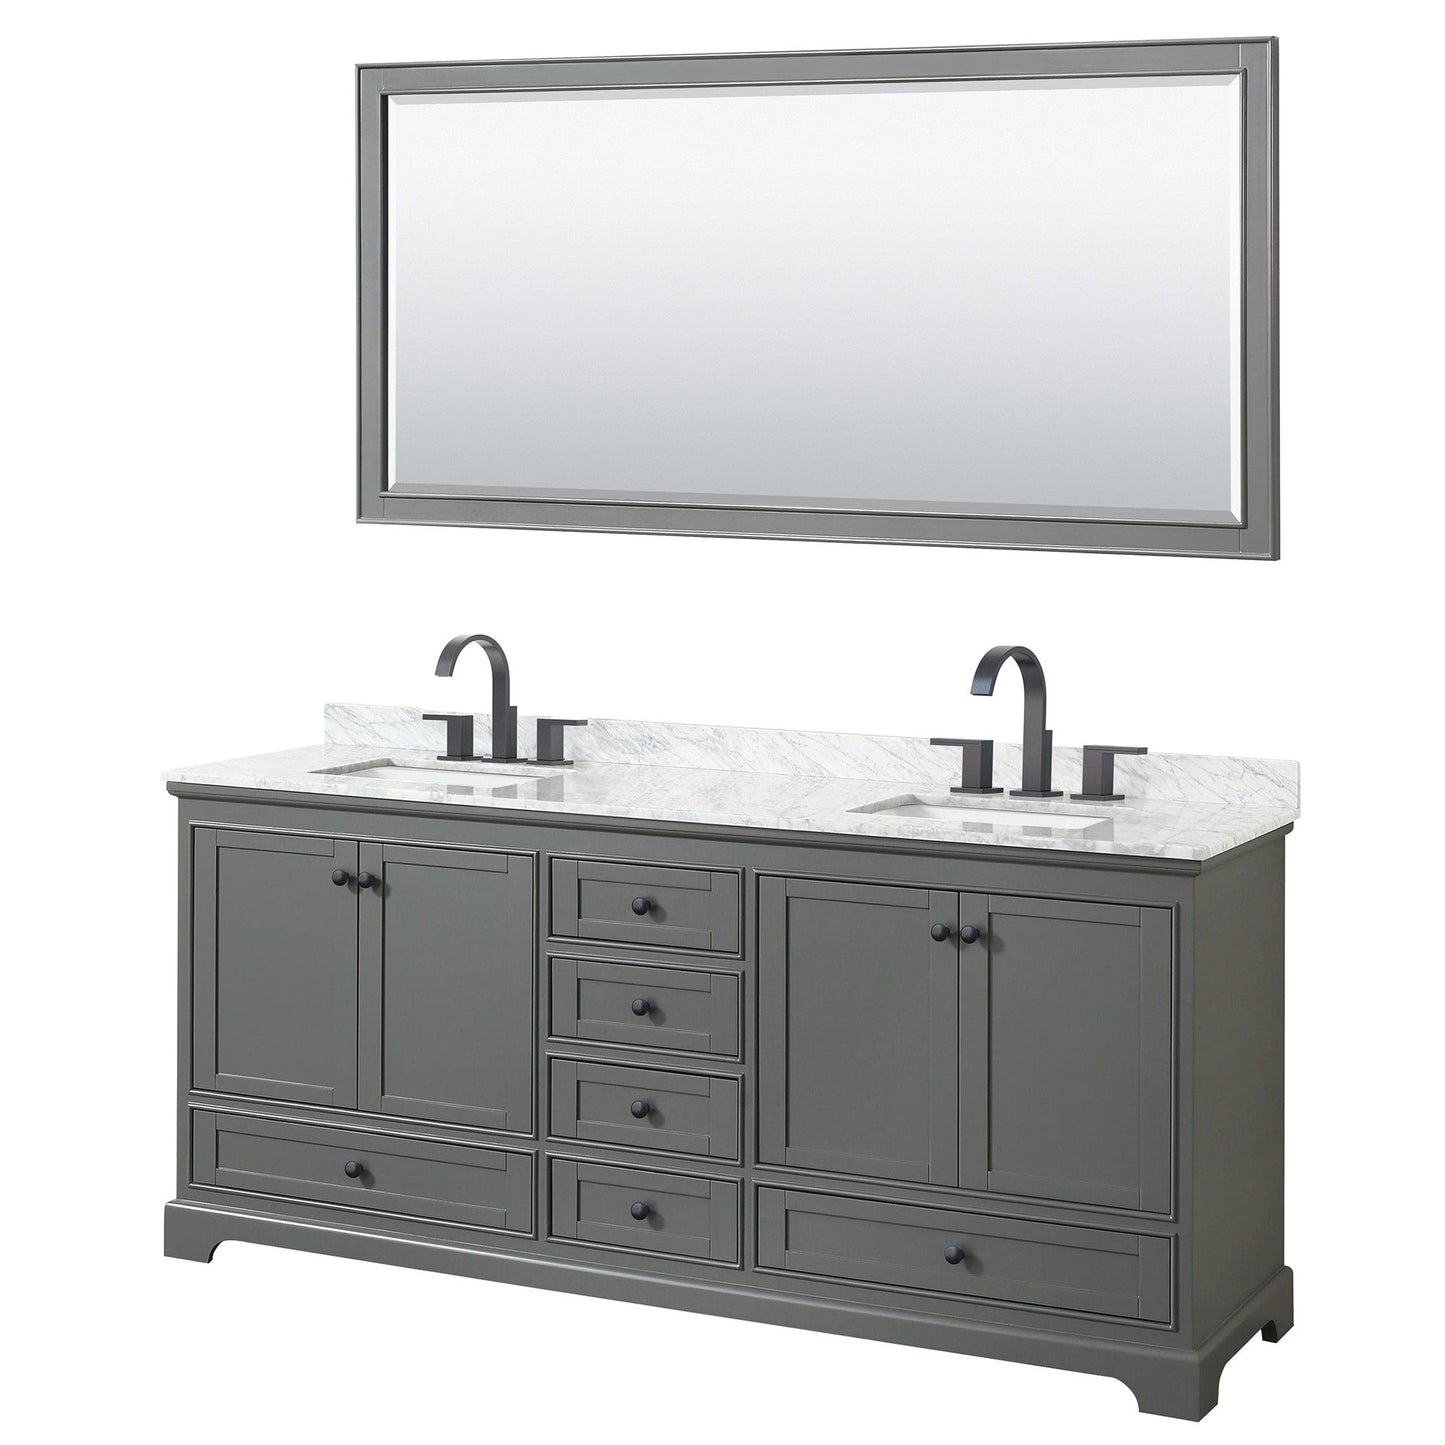 Deborah 80" Double Bathroom Vanity in Dark Gray, White Carrara Marble Countertop, Undermount Square Sinks, Matte Black Trim, 70" Mirror